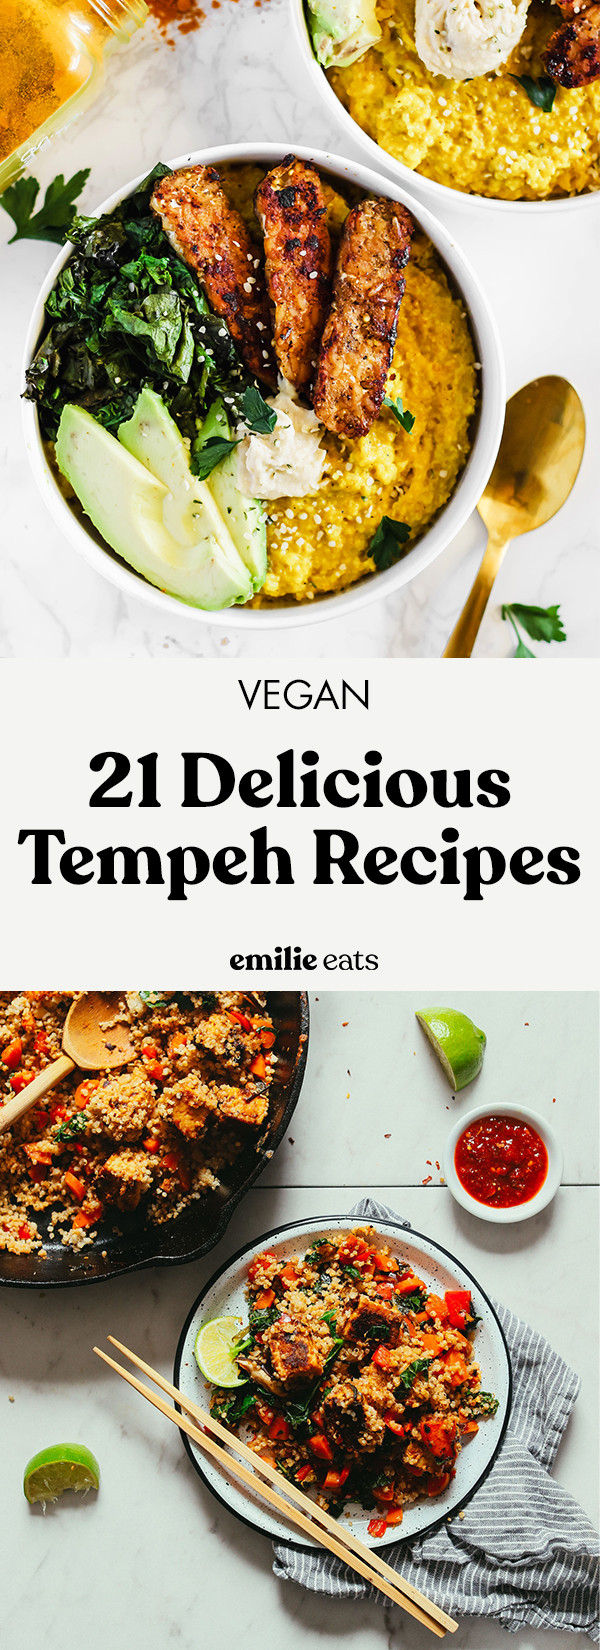 Recipes With Tempeh
 21 Delicious Vegan Tempeh Recipes